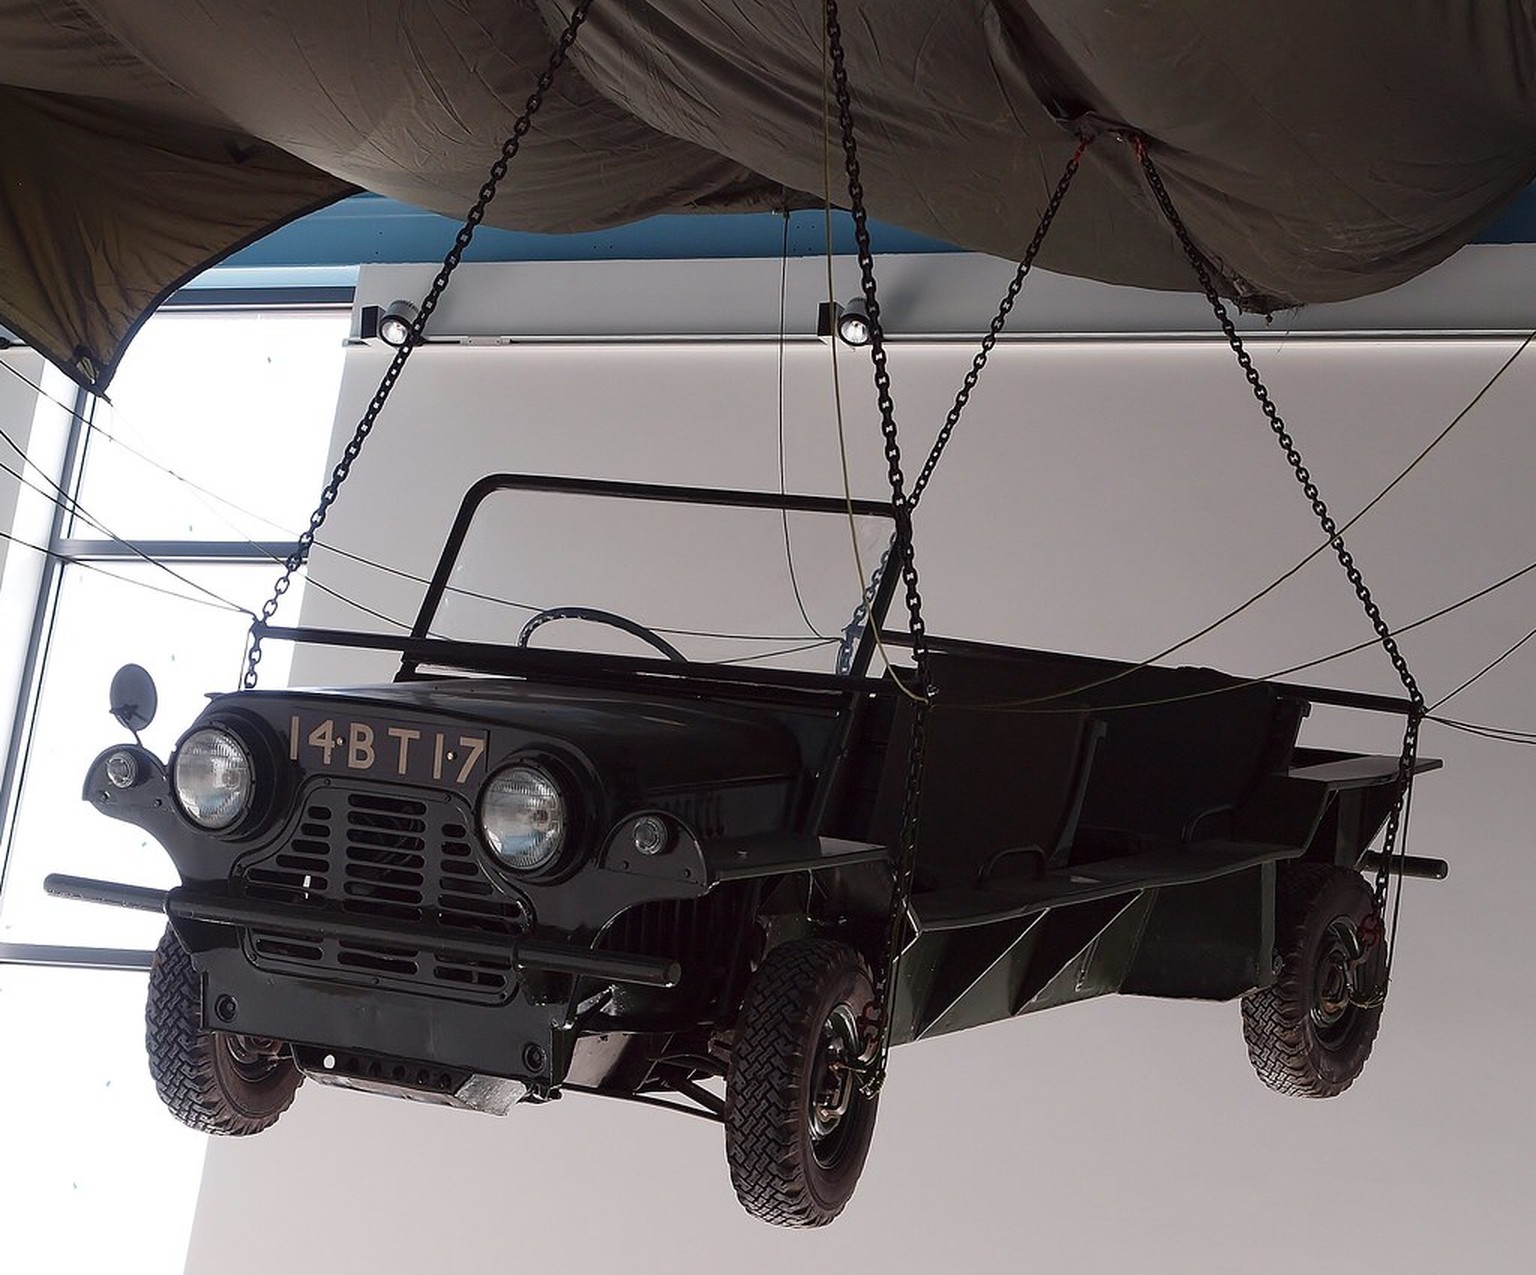 mini moke militär jeep retro history geschichte auto https://www.flickr.com/photos/hh27/13510280575